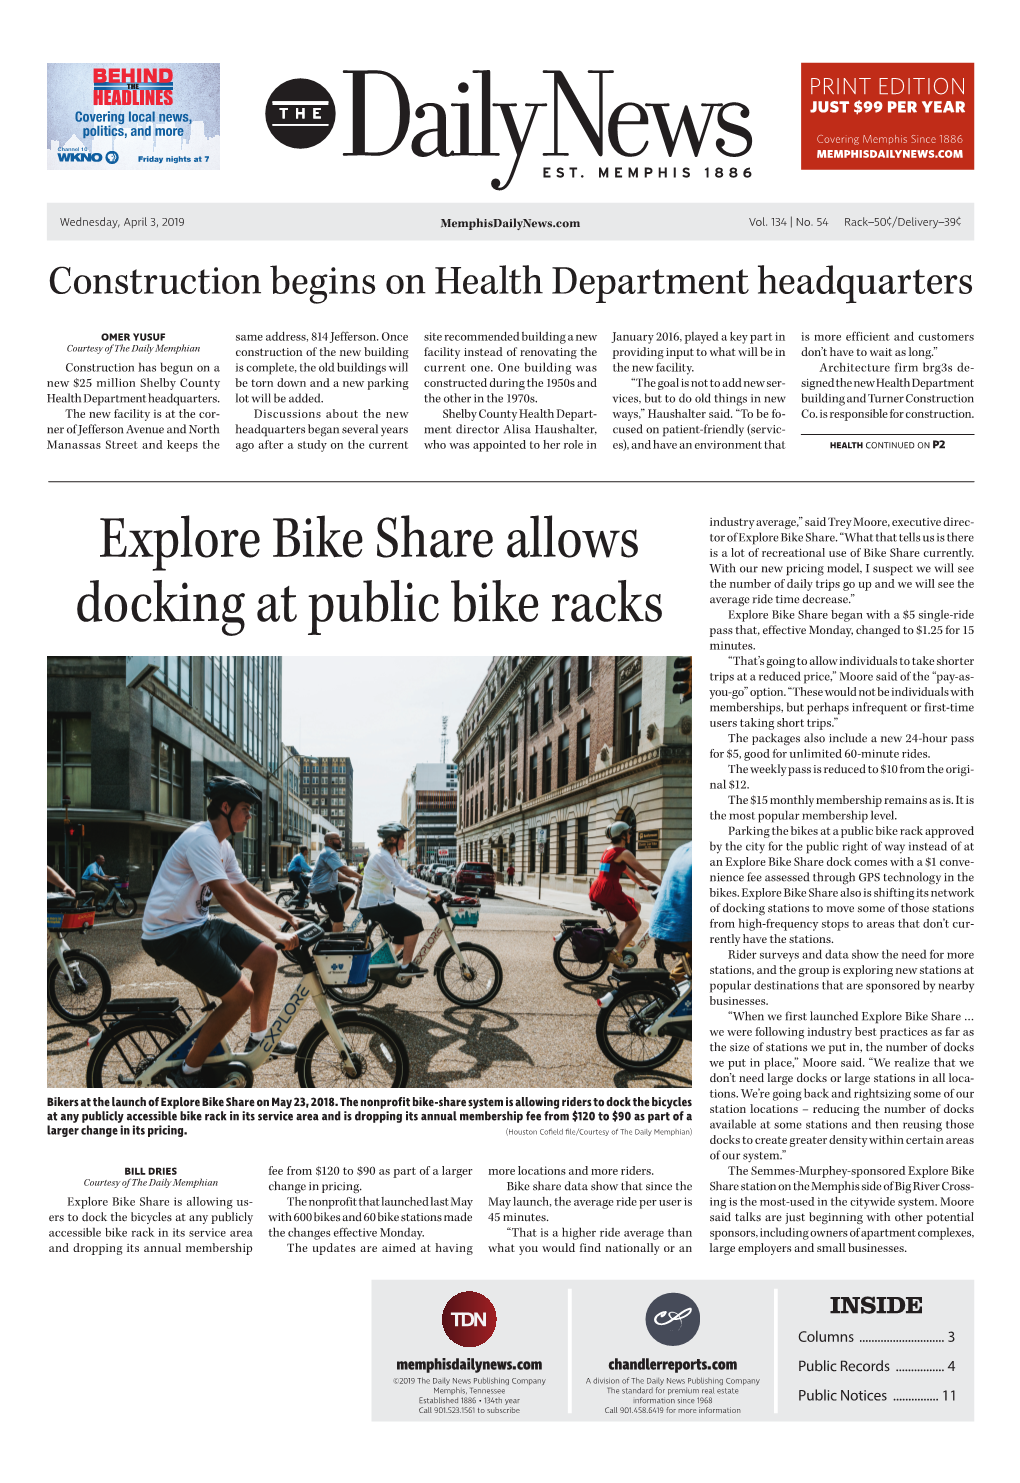 Explore Bike Share Allows Docking at Public Bike Racks